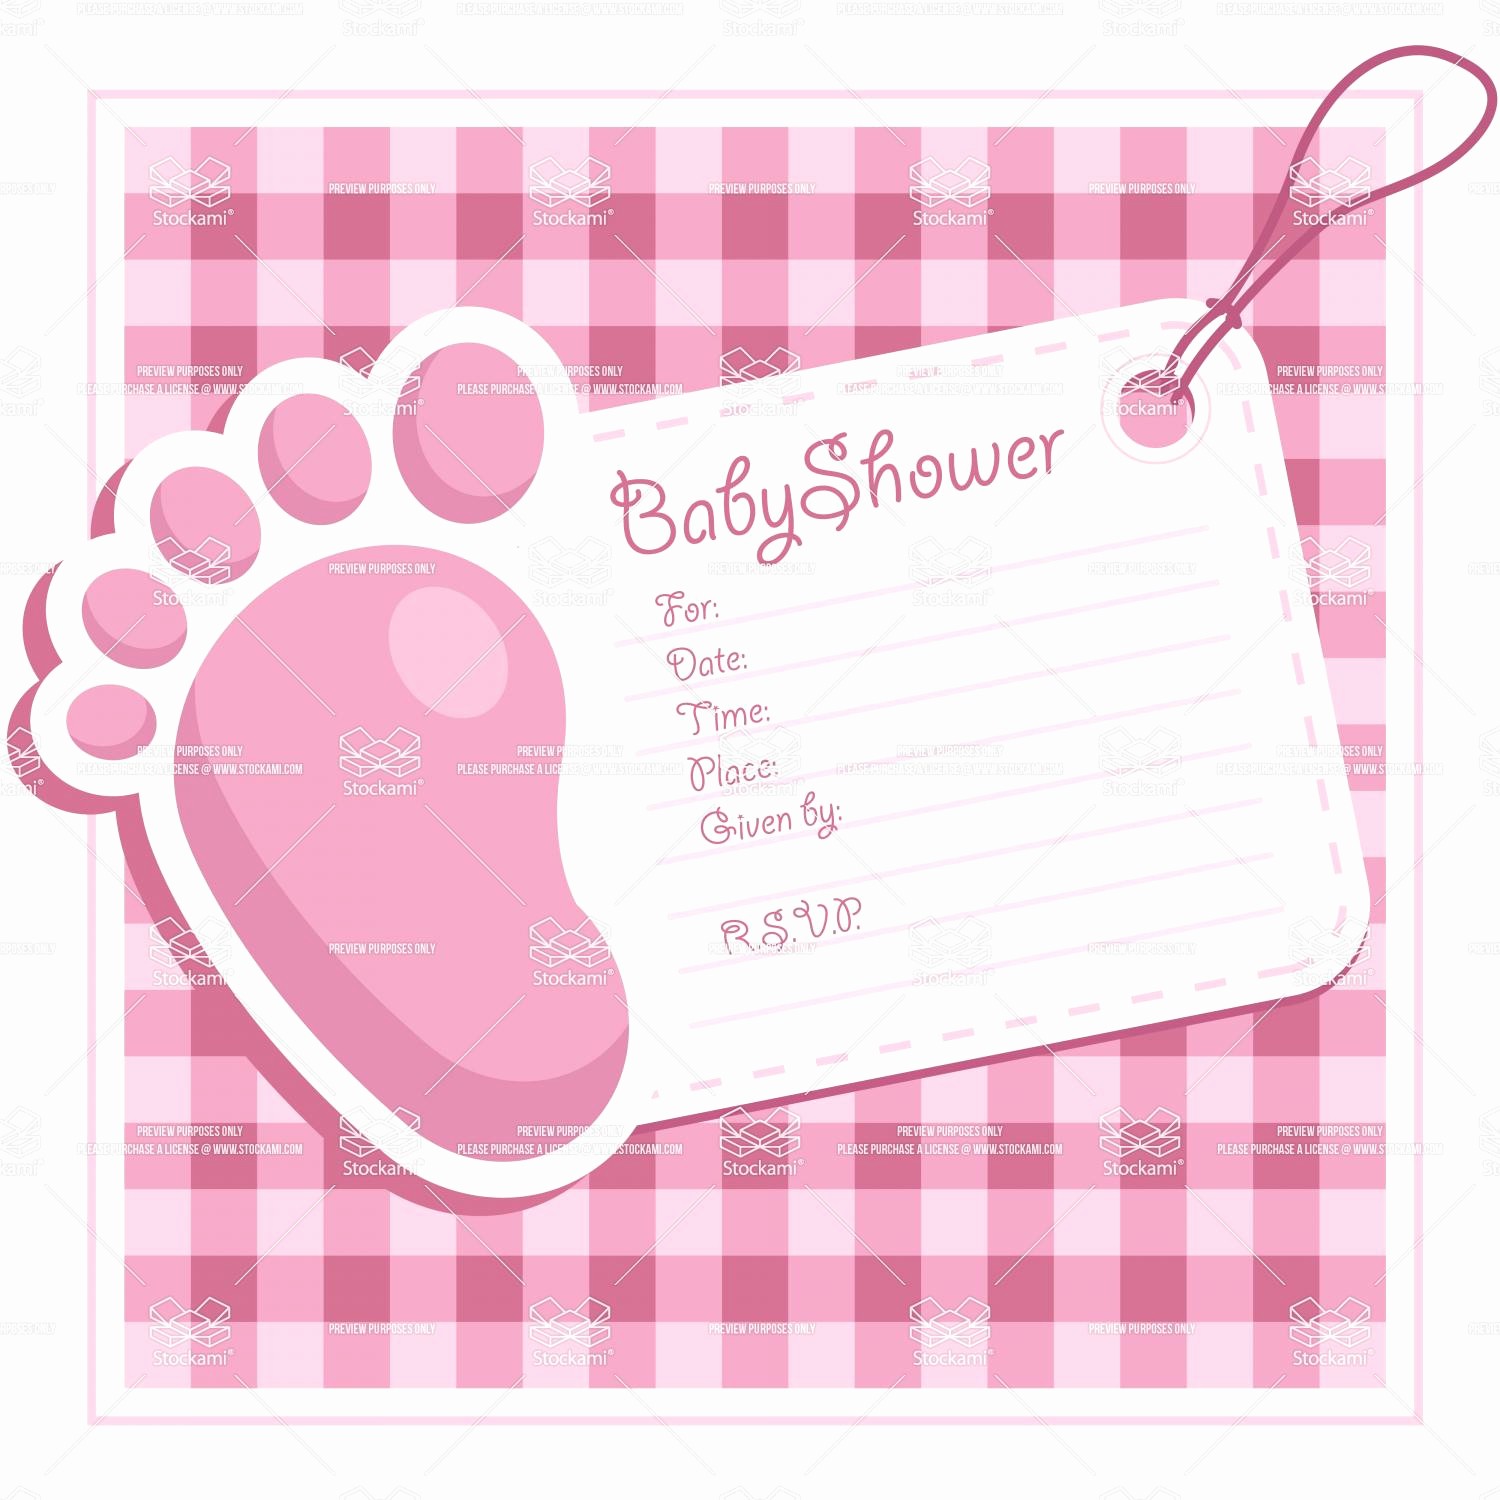 Baby Shower Invitation List Template Beautiful Free Printable Baby Shower Invitations Templates Bridal